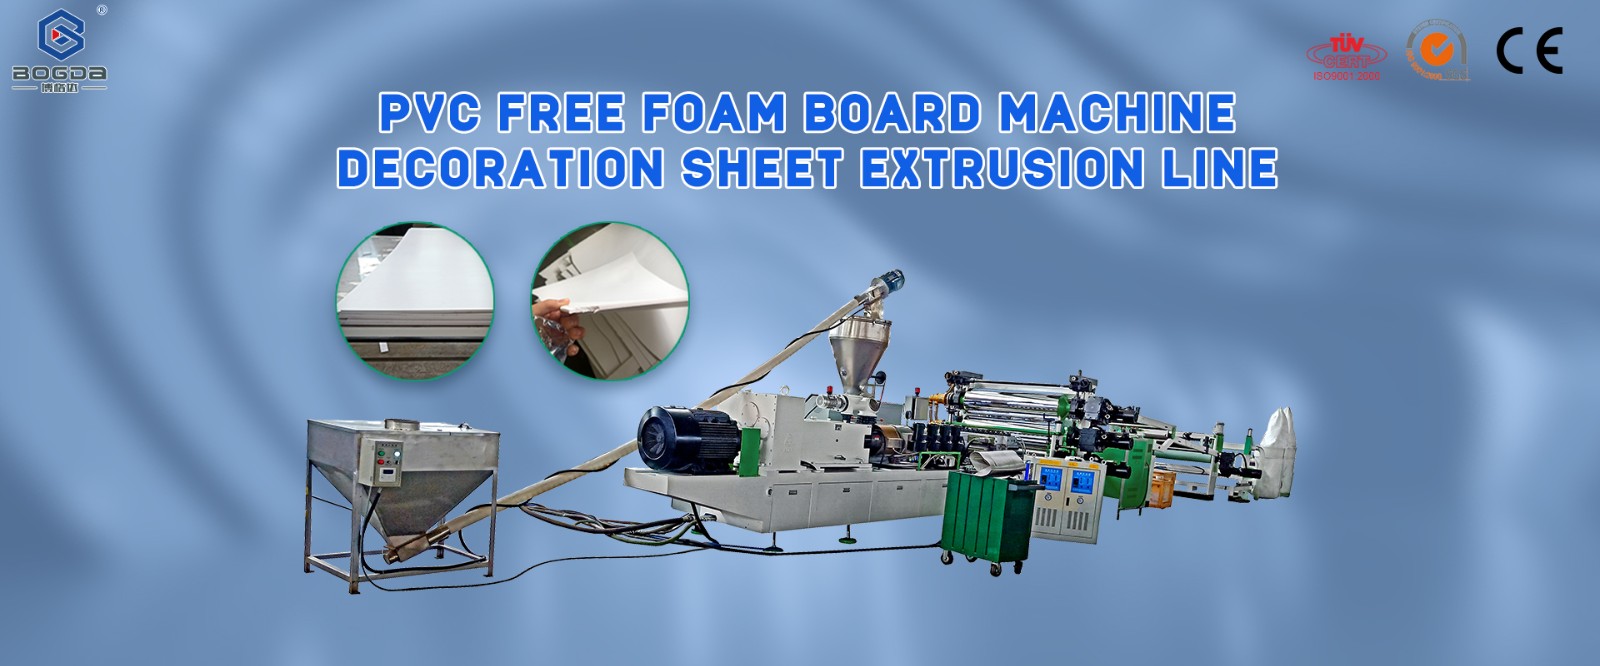 PVC Free Foam Board Machine Decoration Sheet Extrusion Line